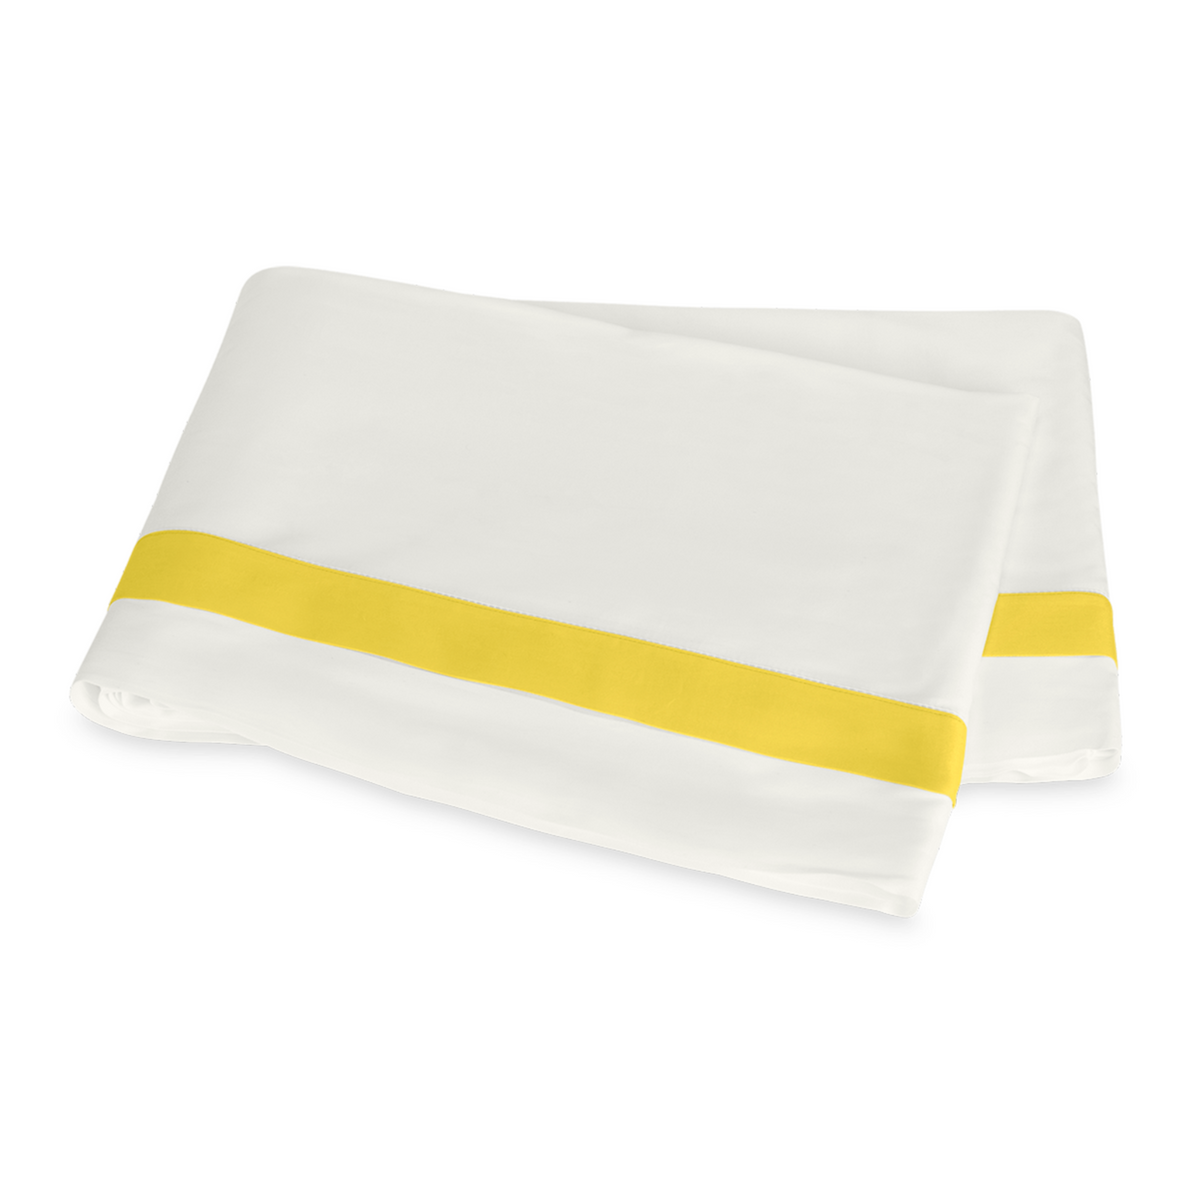 Silo Image of Matouk Ambrose Bedding Flat Sheet in Bone/Lemon Color